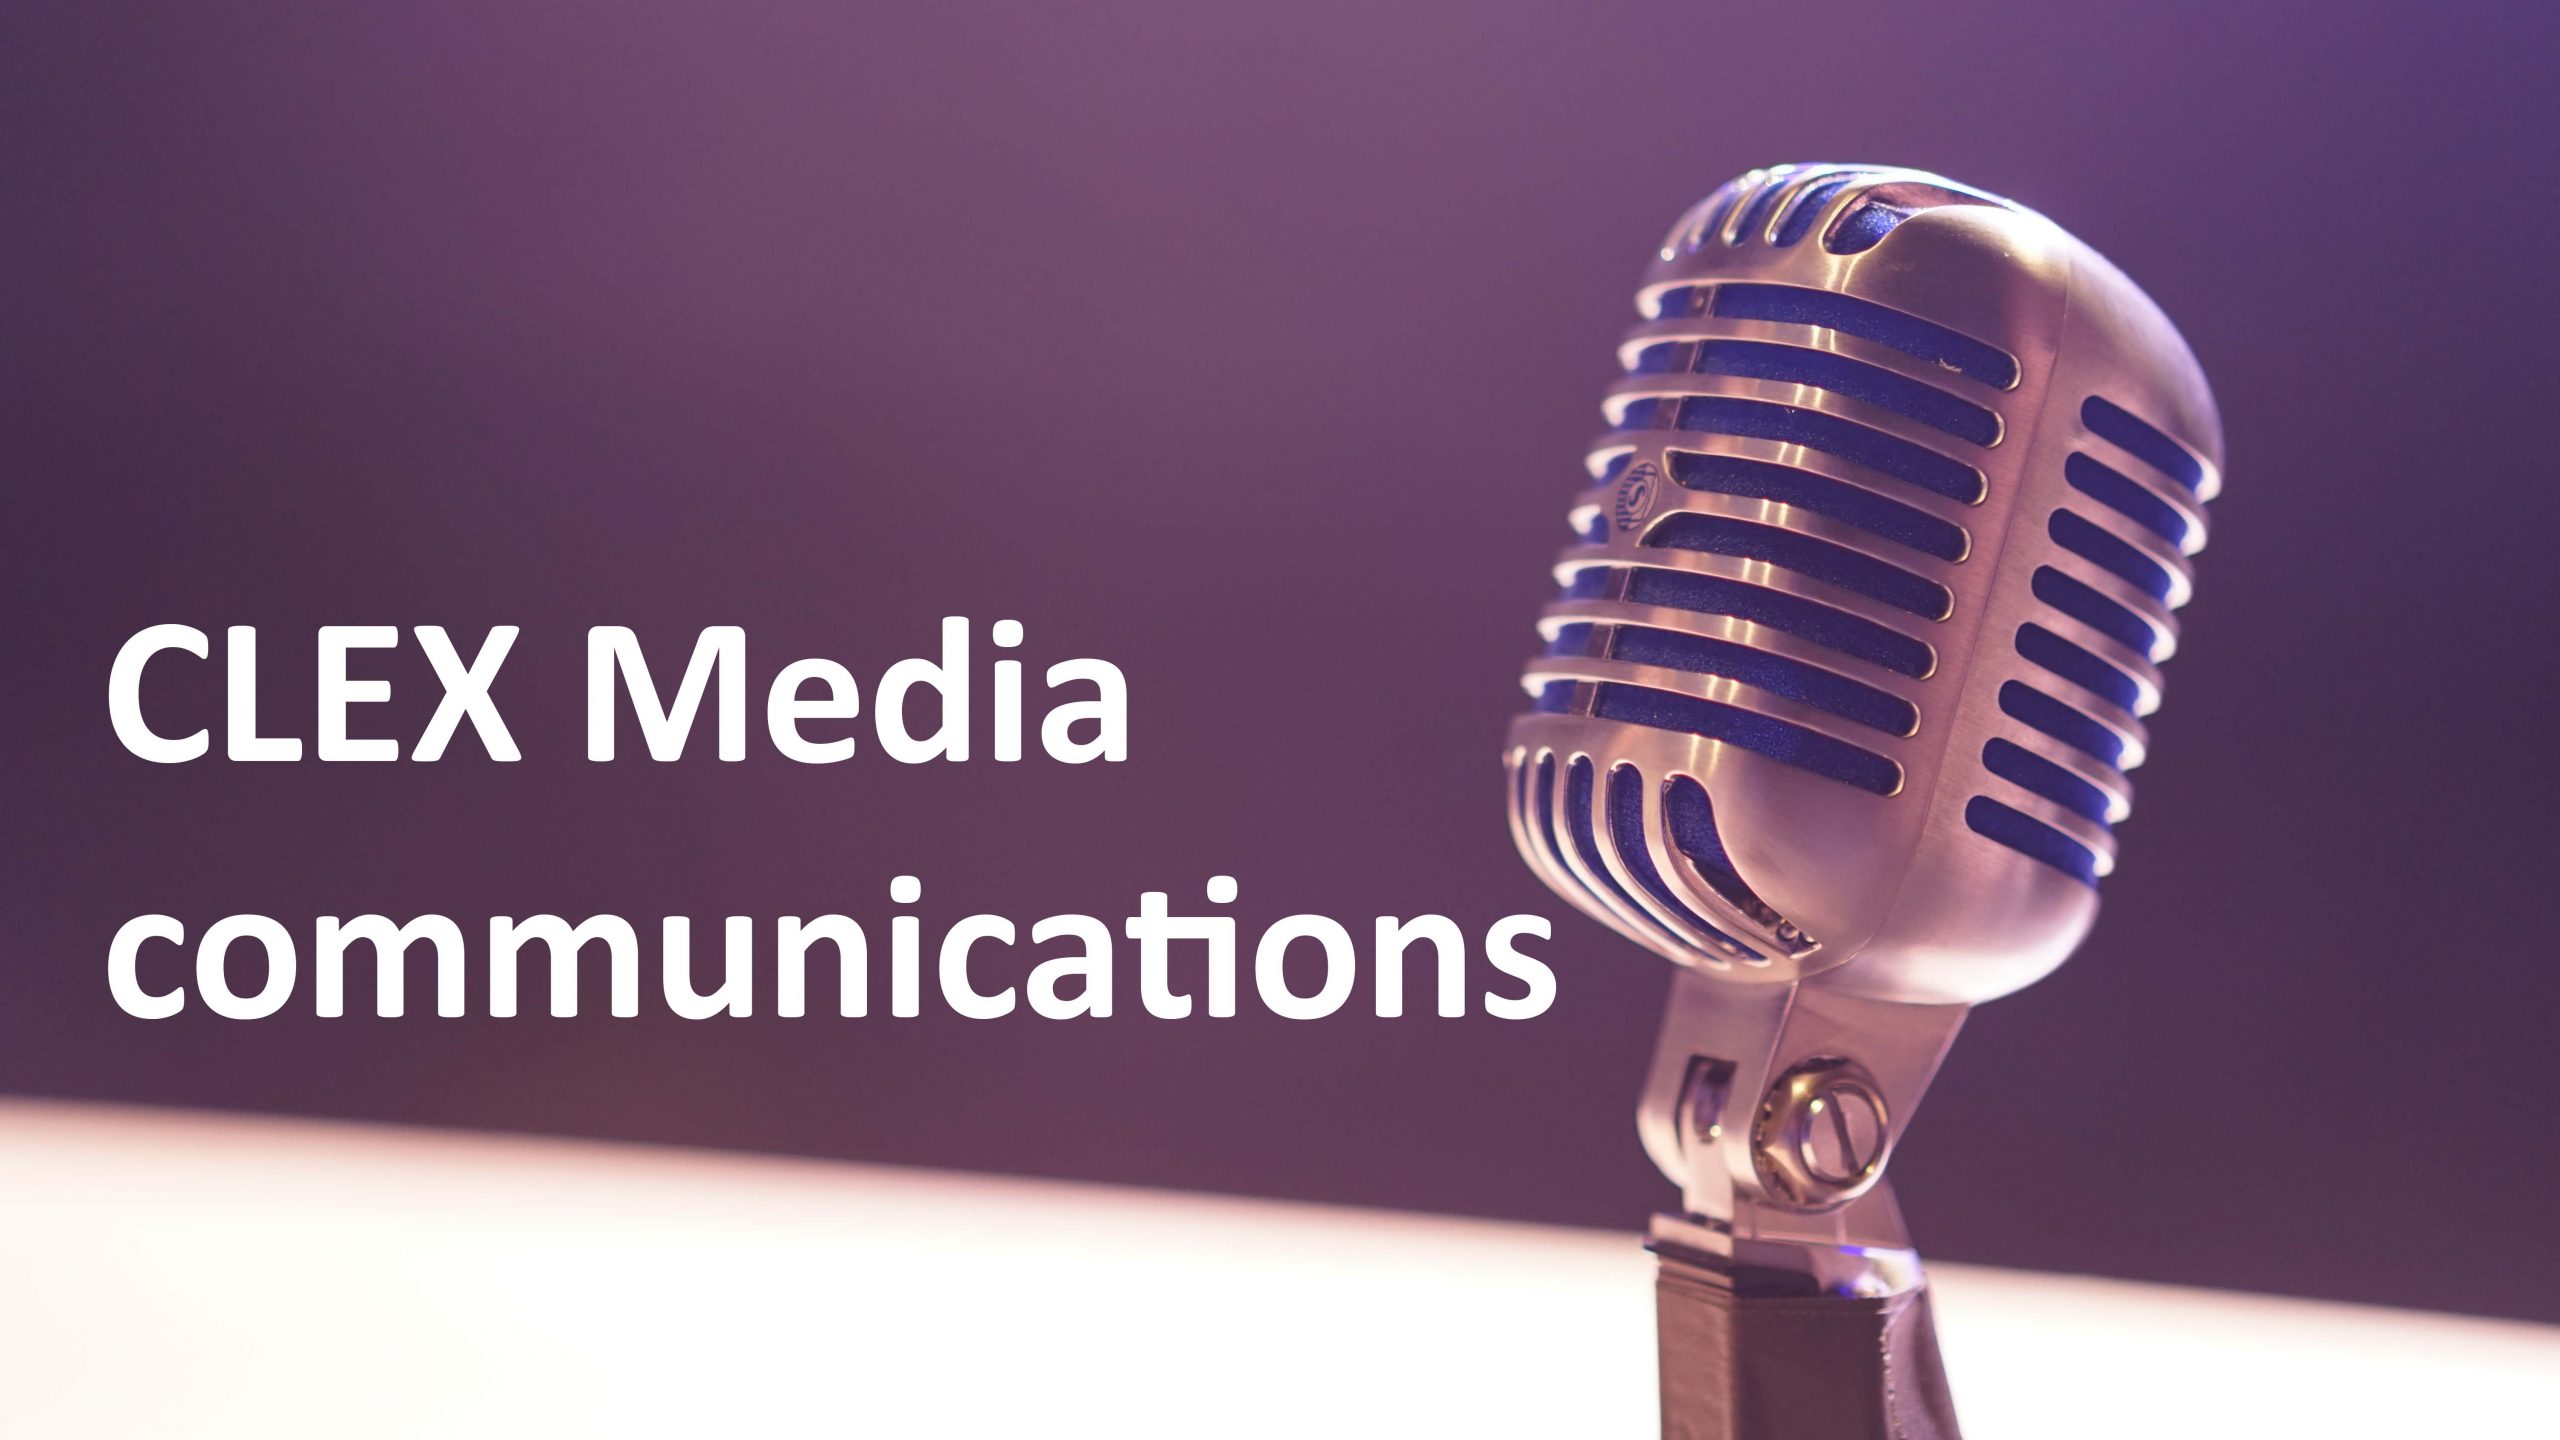 Media & Communication Report – April 2020